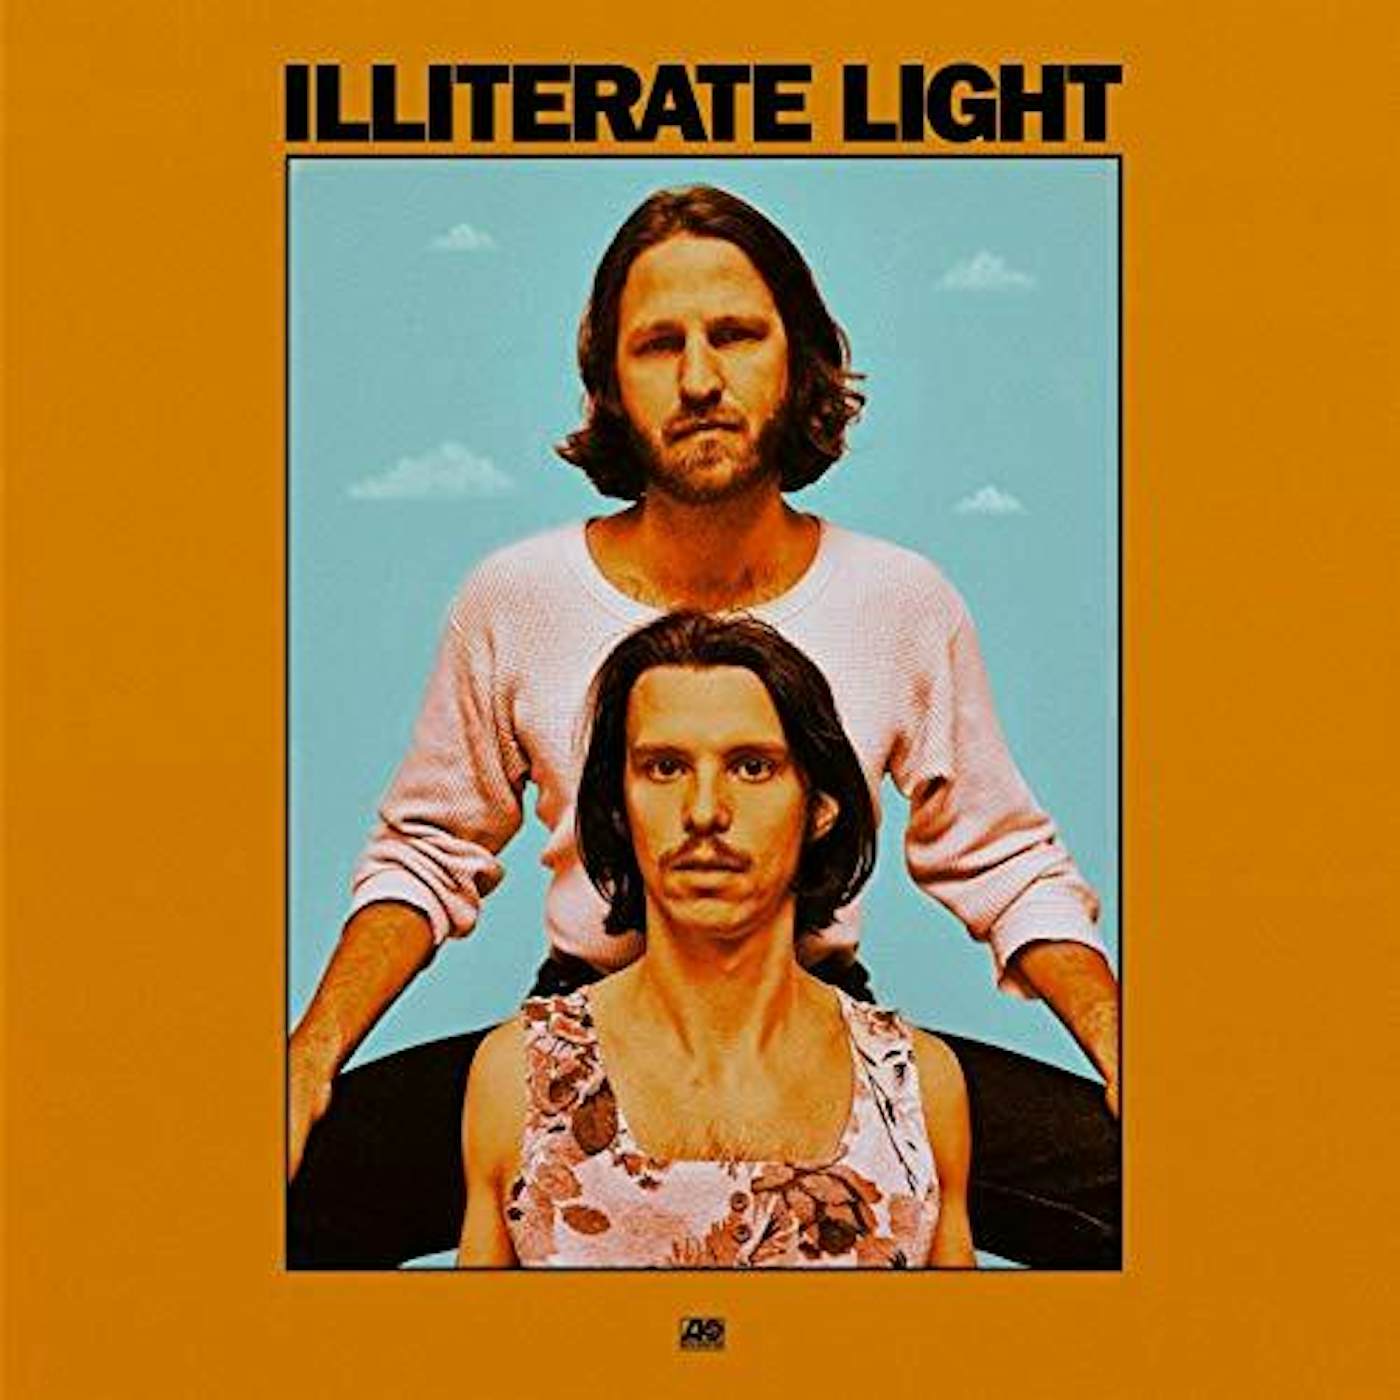 ILLITERATE LIGHT Vinyl Record